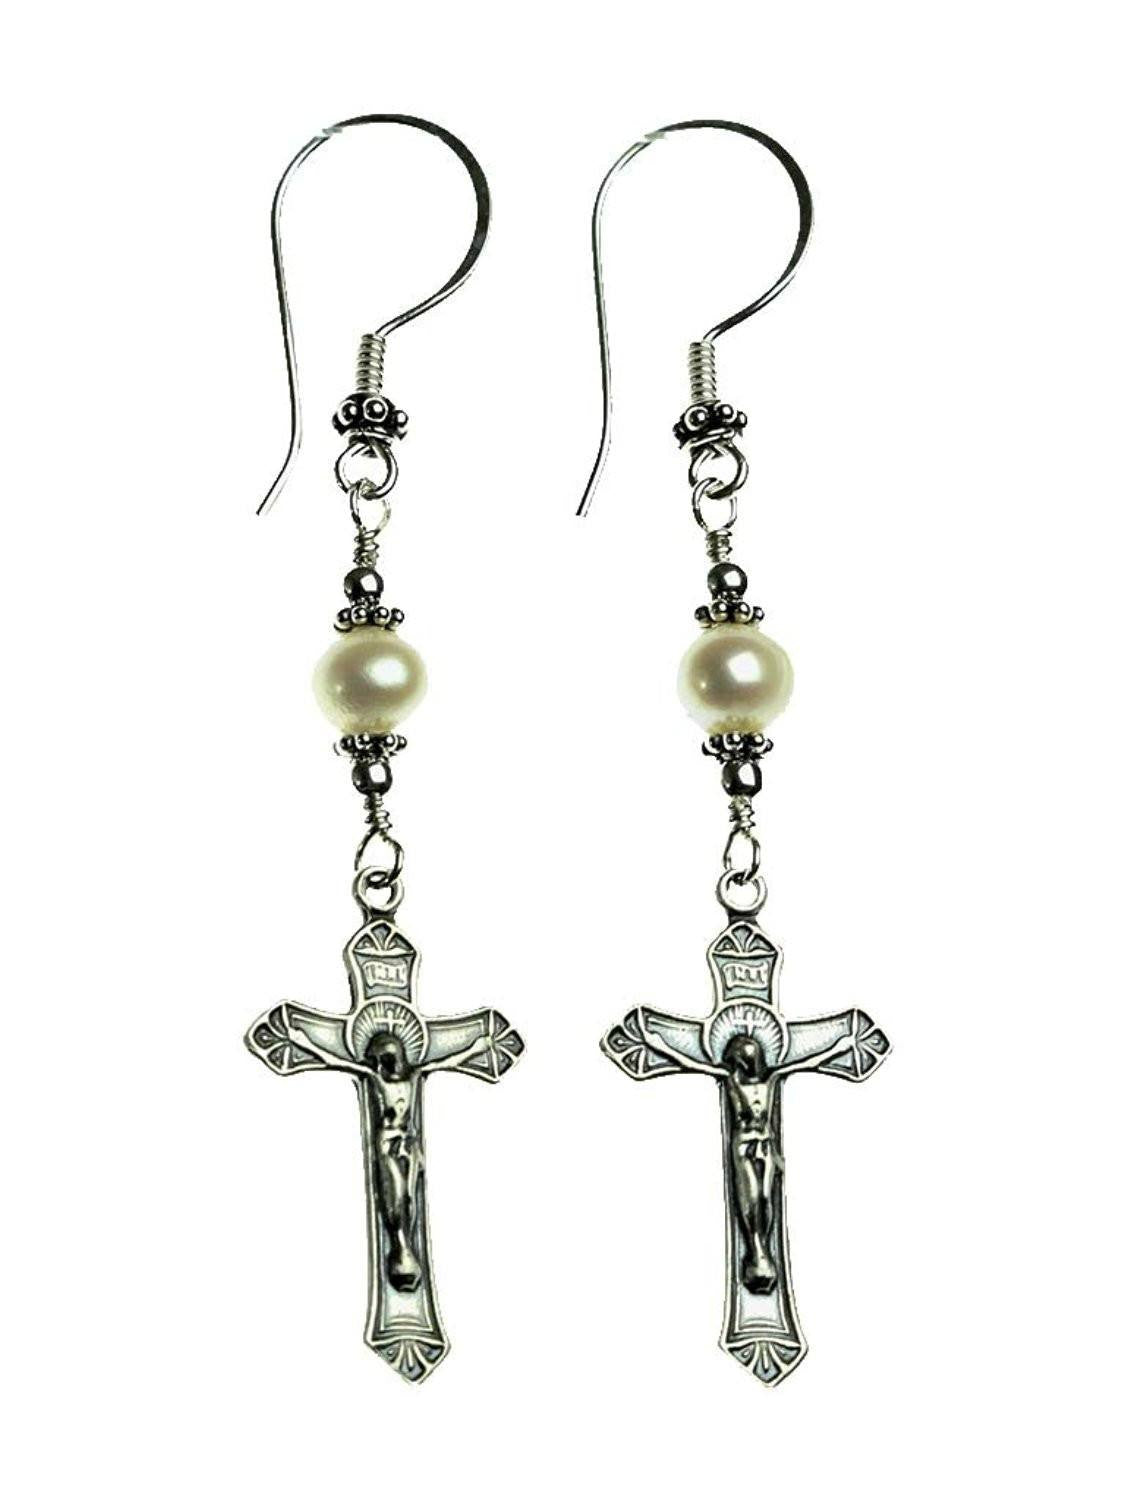 Handmade Sterling Silver Crucifix Earrings Freshwater Cultured Pearl